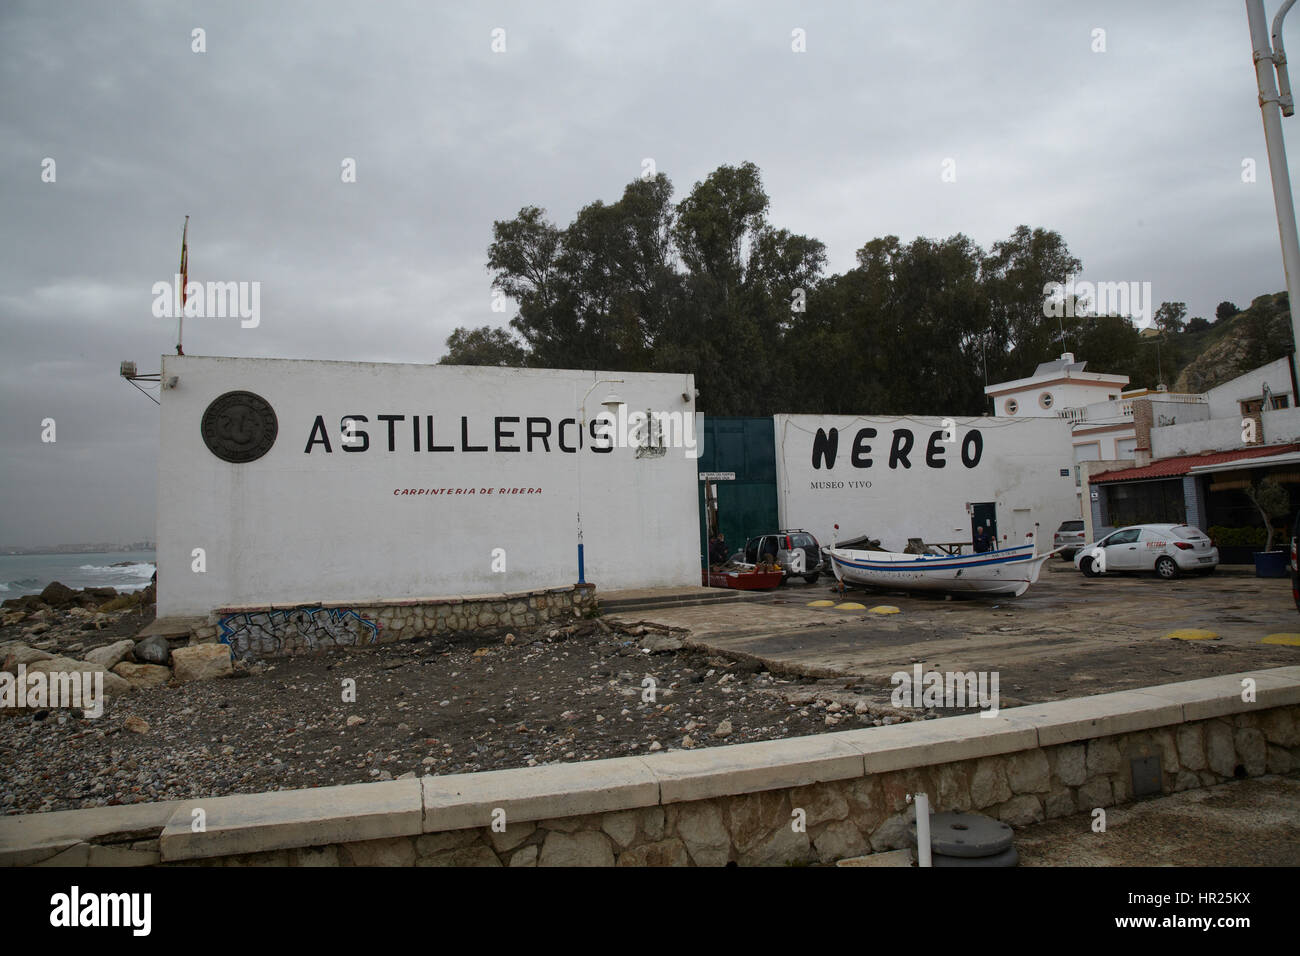 'Boatyard, Astilleros Nereo', Malaga Spain Stock Photo